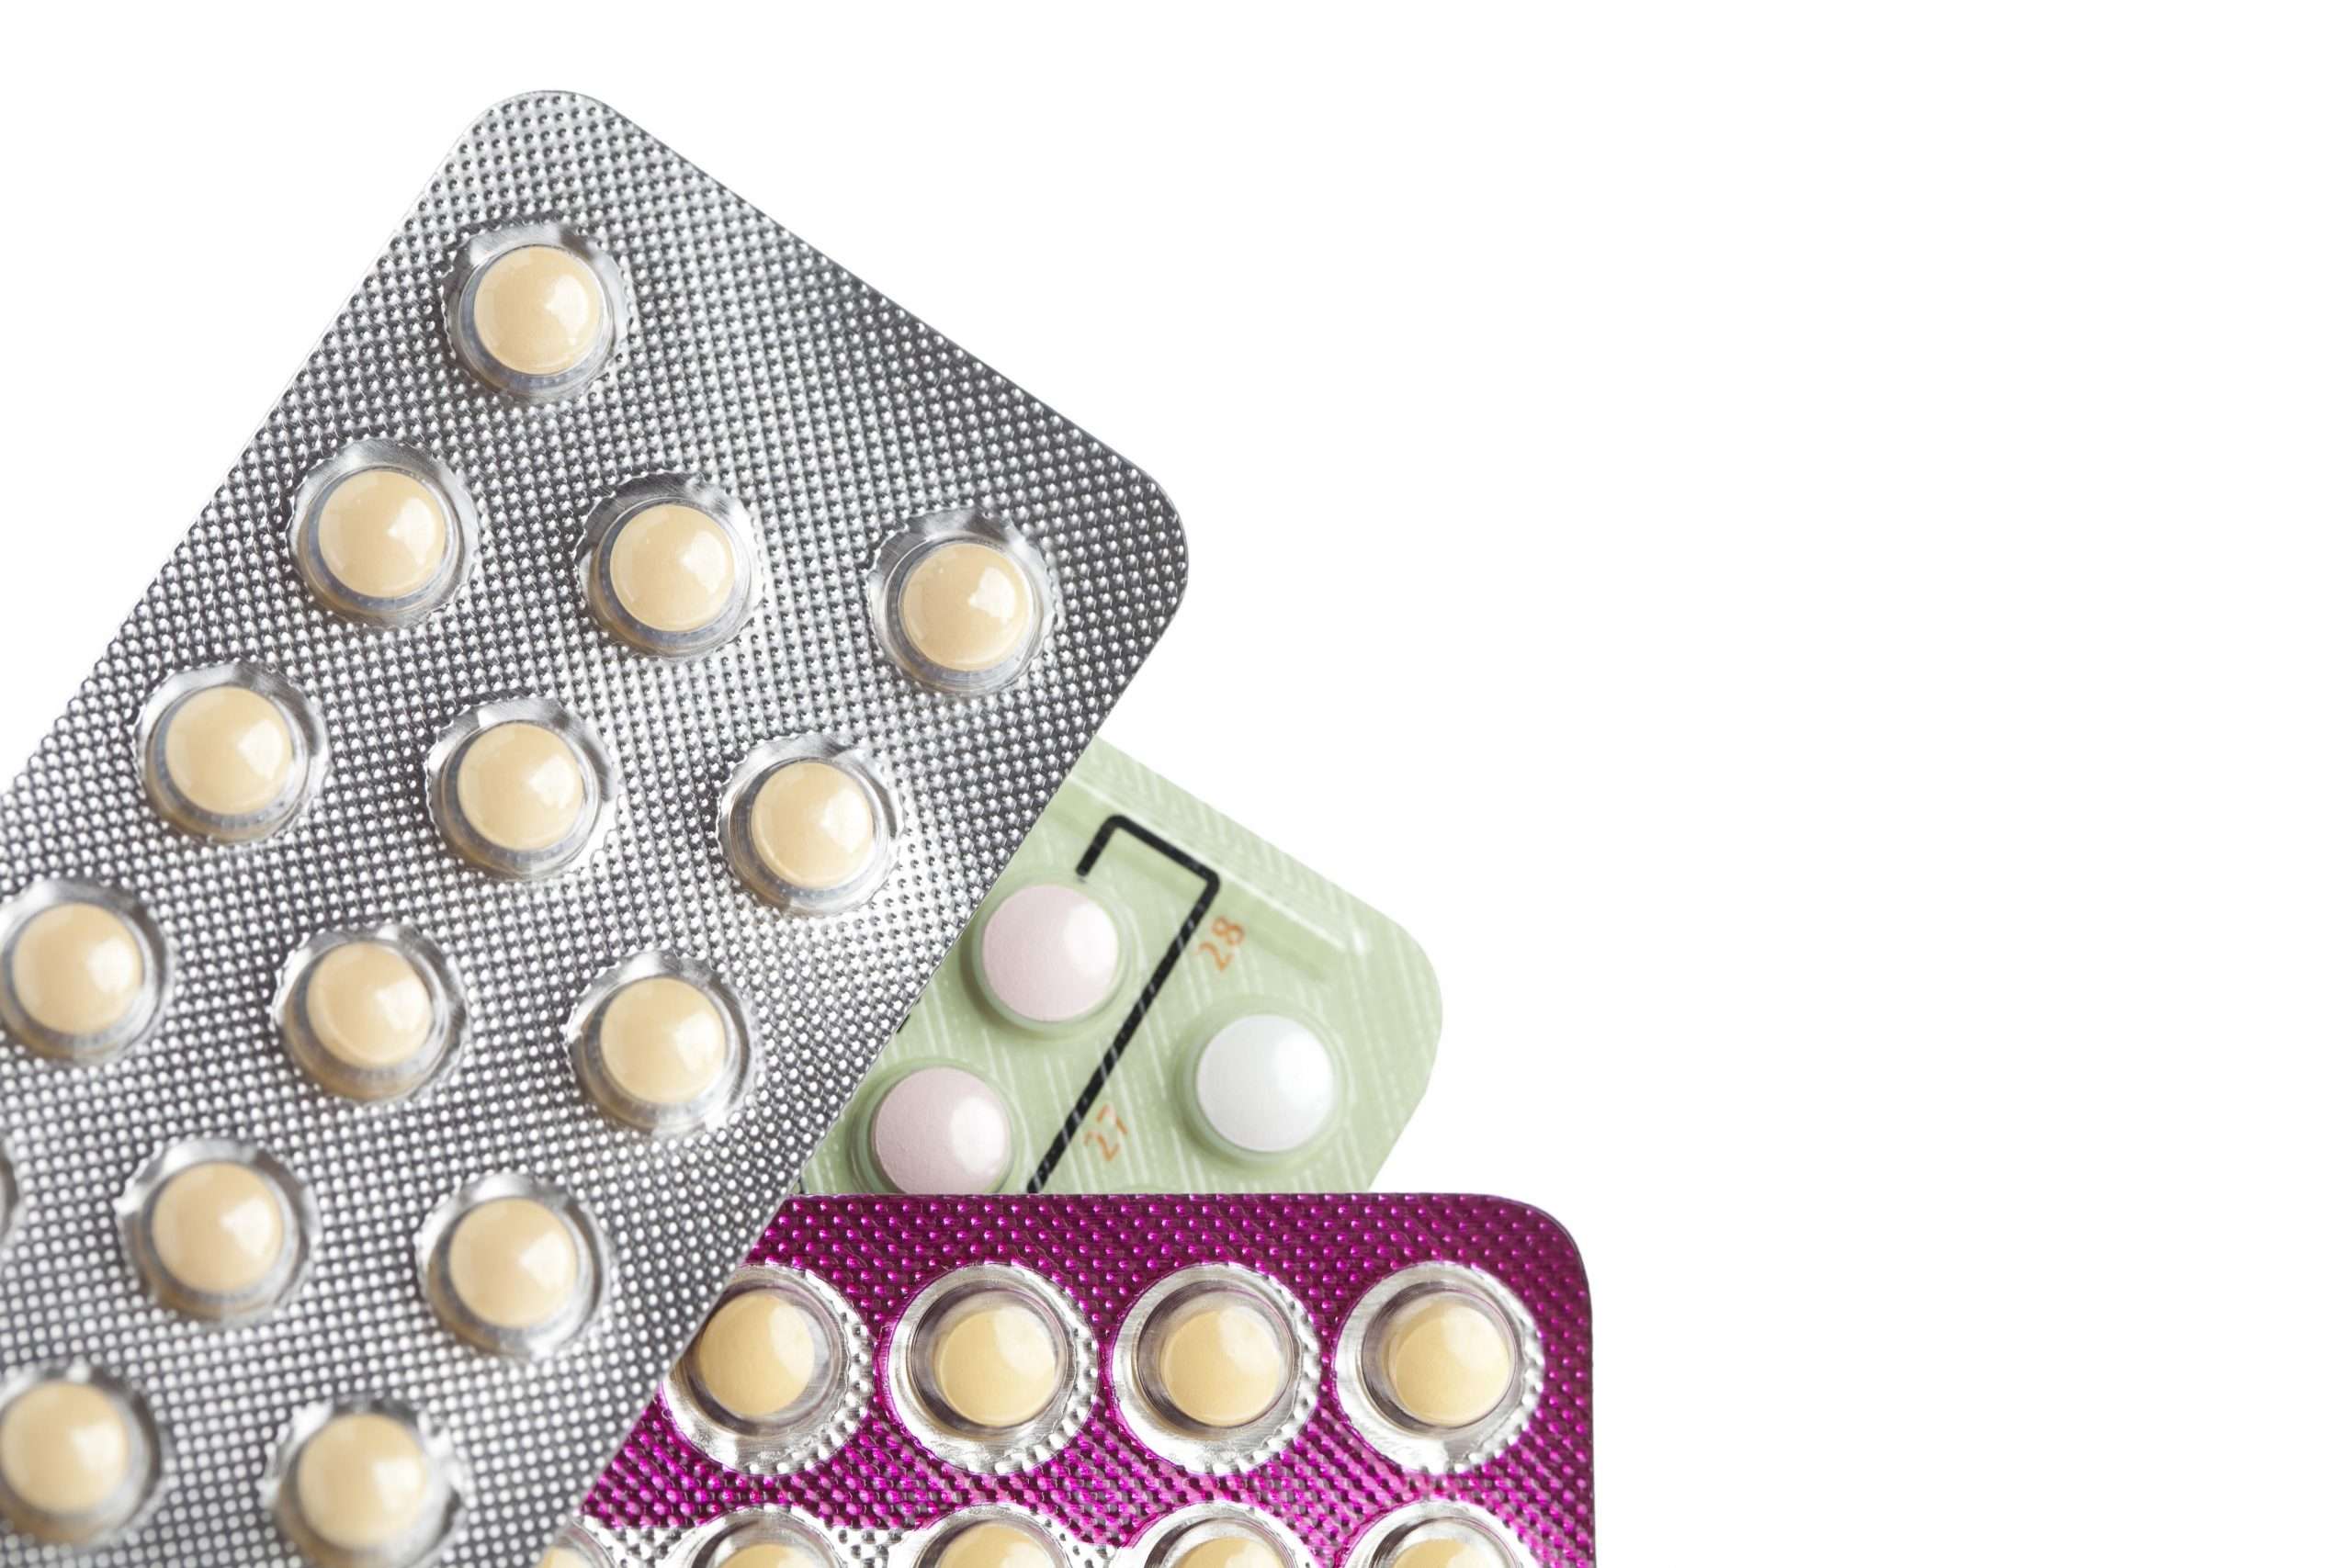 Birth Control Pills Still Linked to Breast Cancer